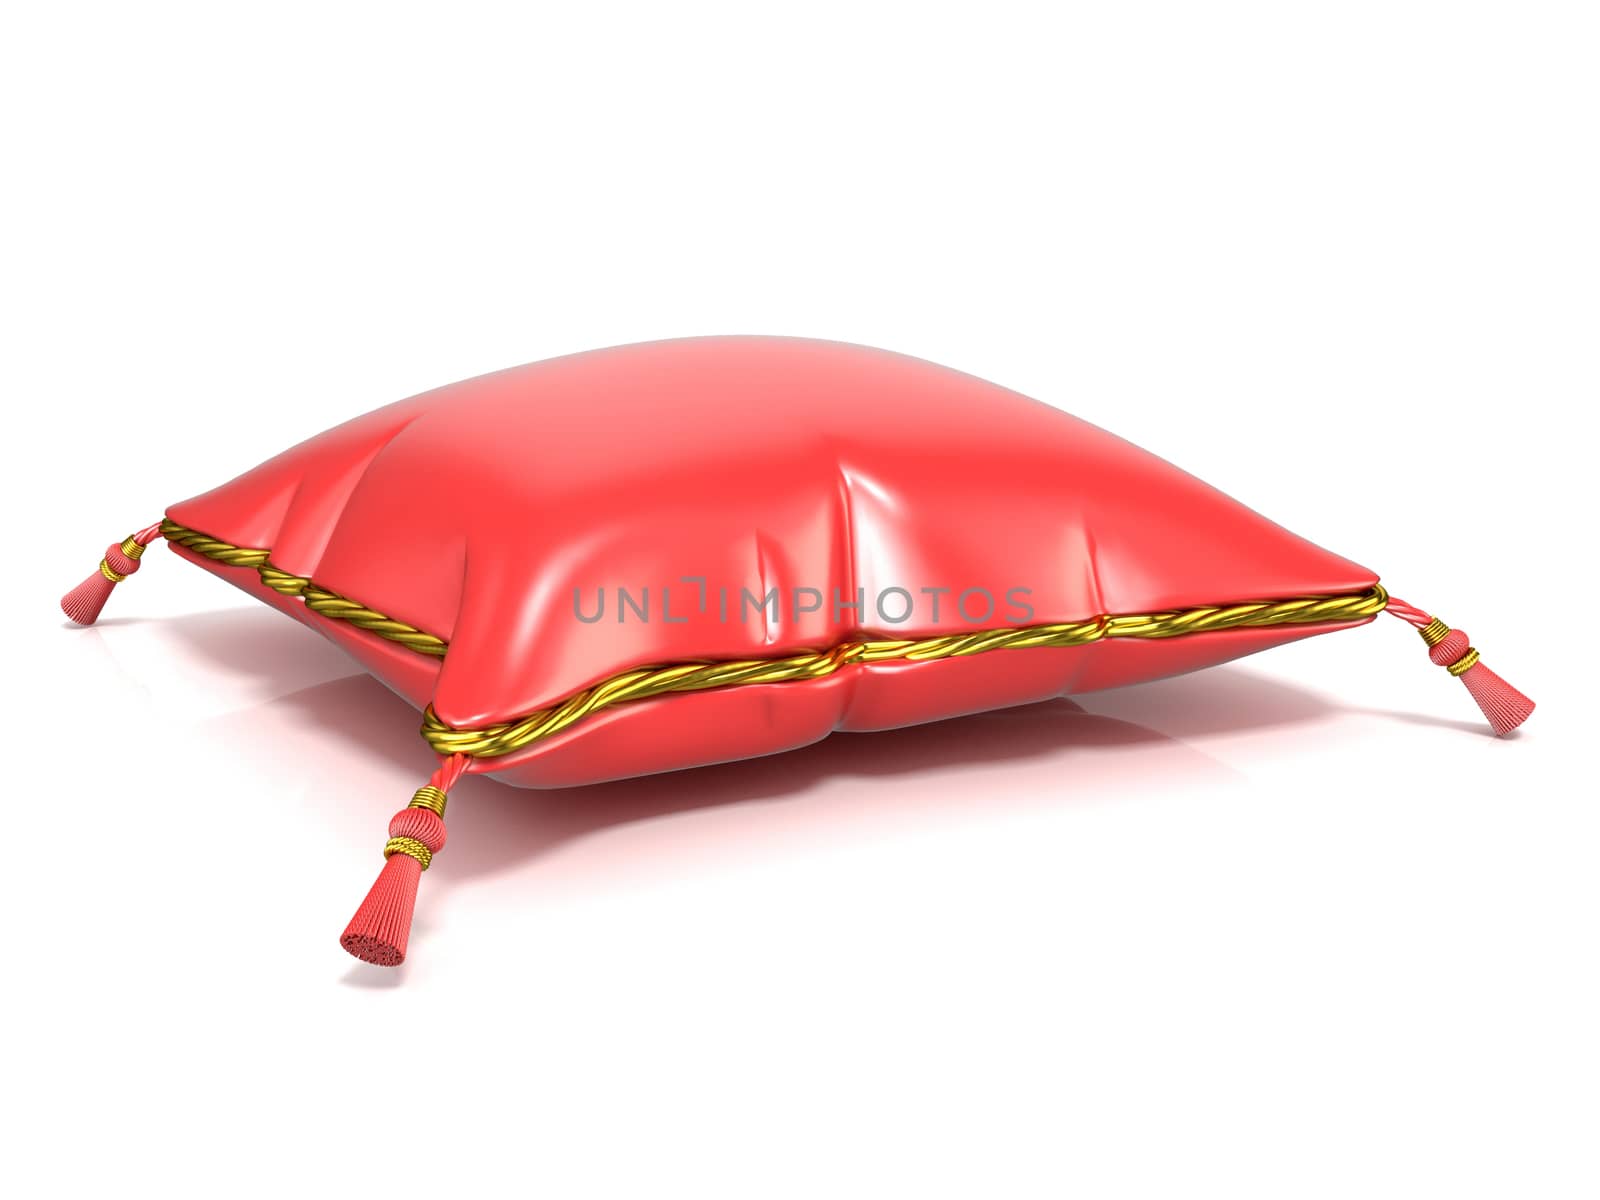 Royal red velvet pillow with golden rope. 3D render illustration isolated on white background